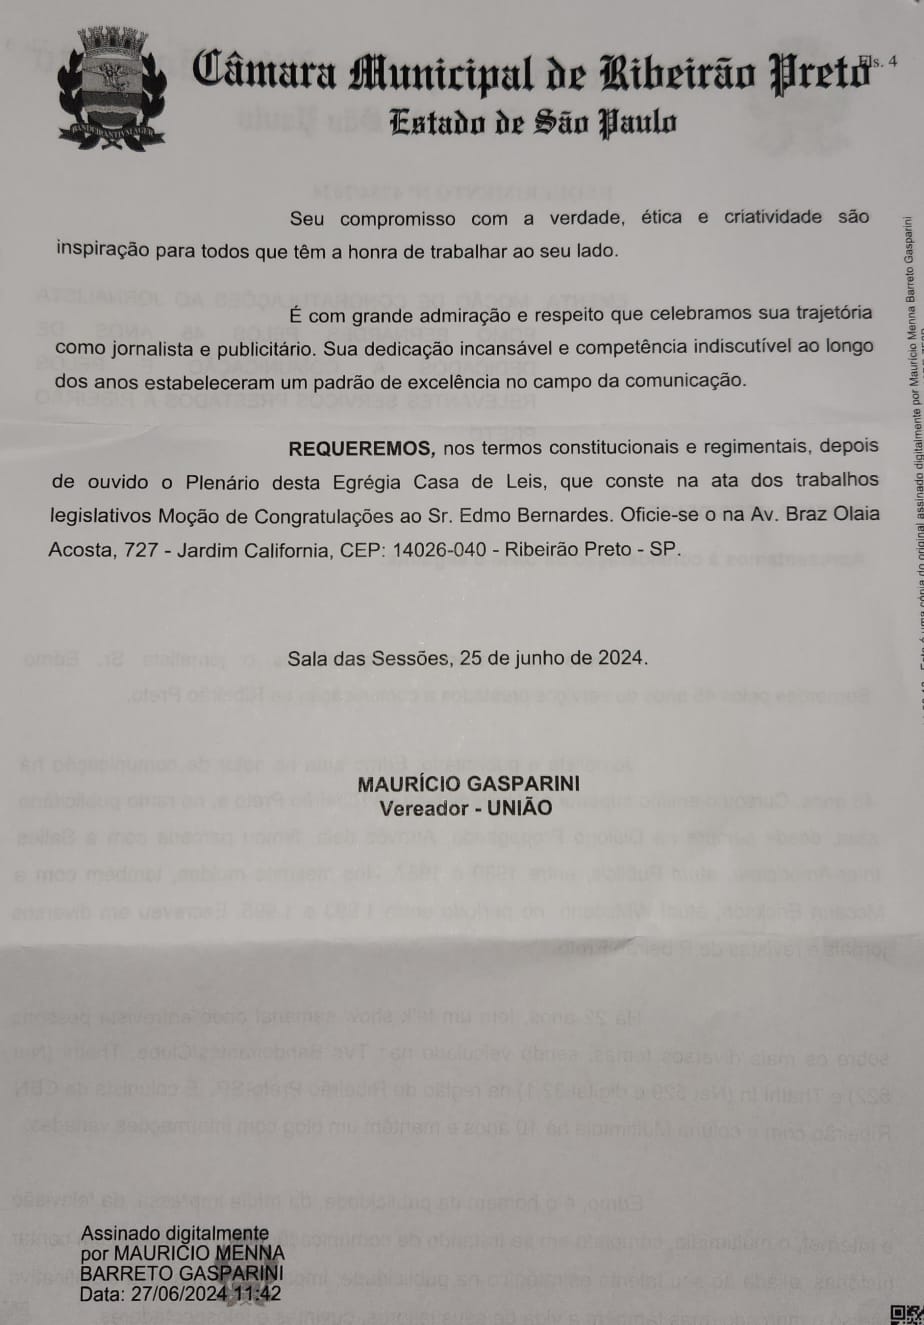 MOO DE CONGRATULAO RECEBIDA DA CMARA MUNICIPAL DE RIBEIRO PRETO